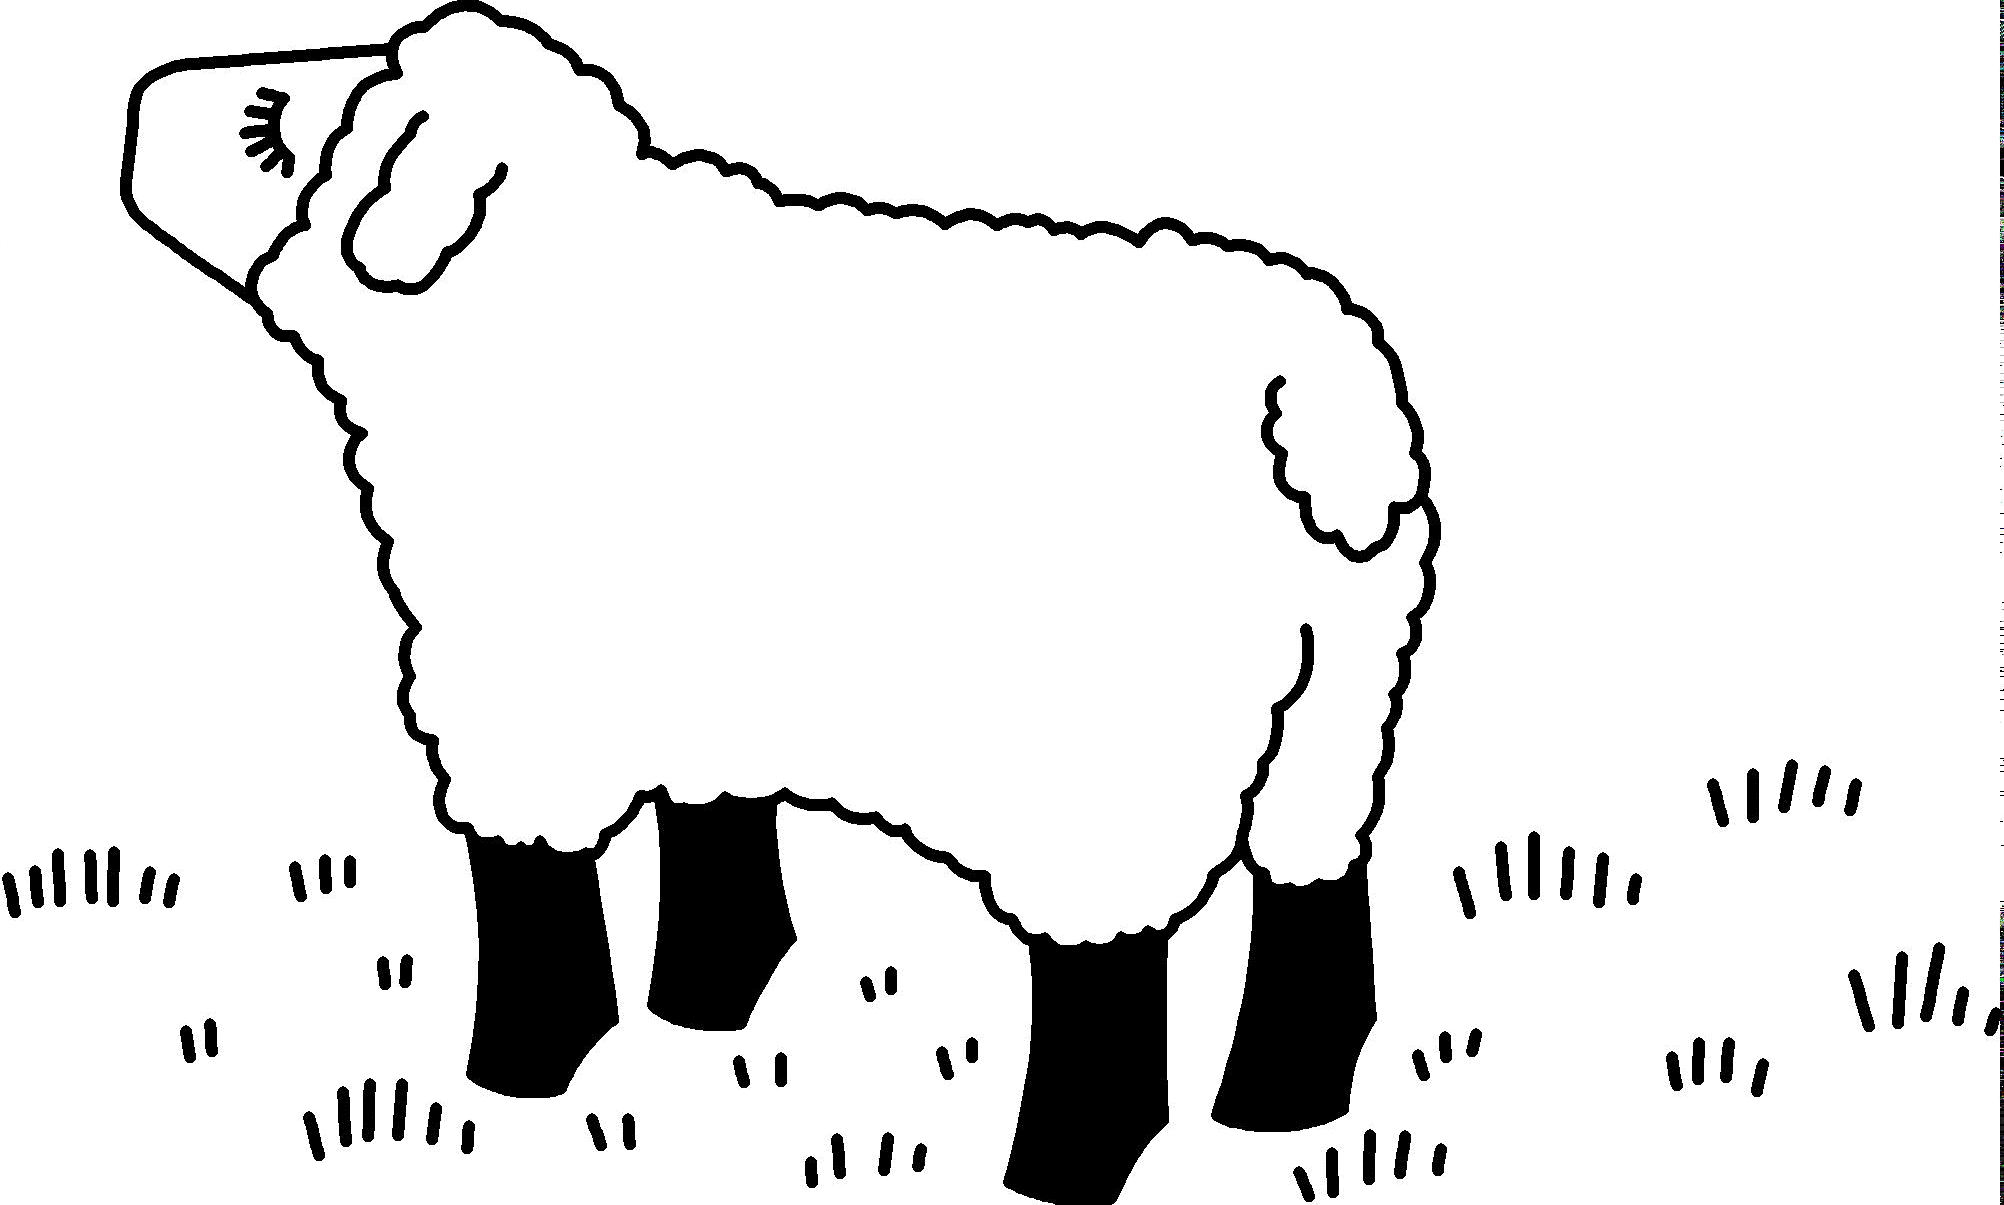 How do I make these sheep sexy?